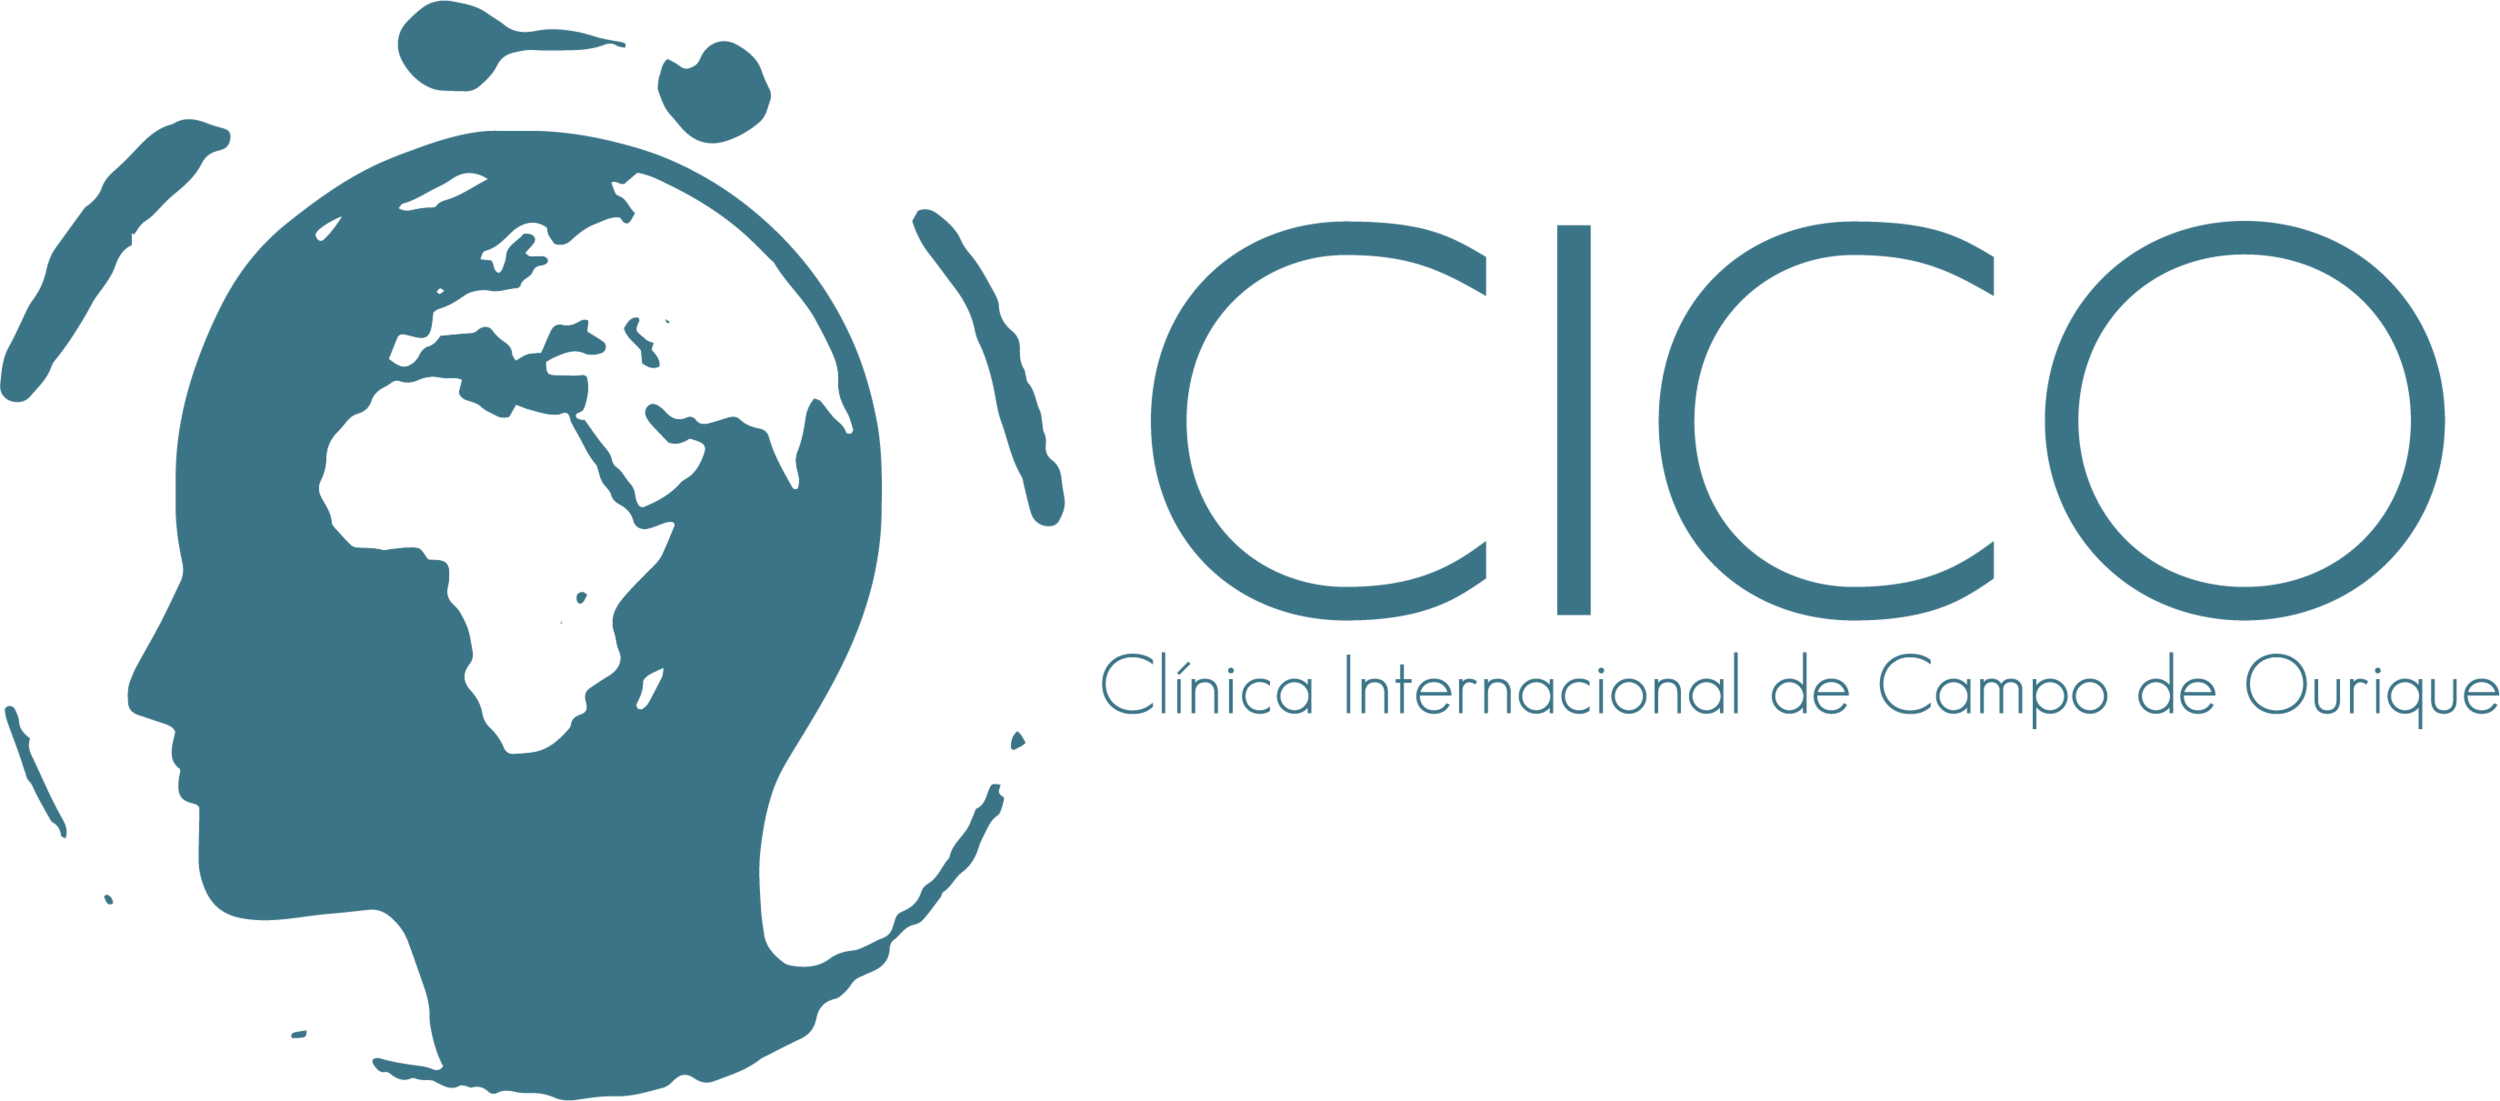 CICO - Clínica Internacional de Campo de Ourique